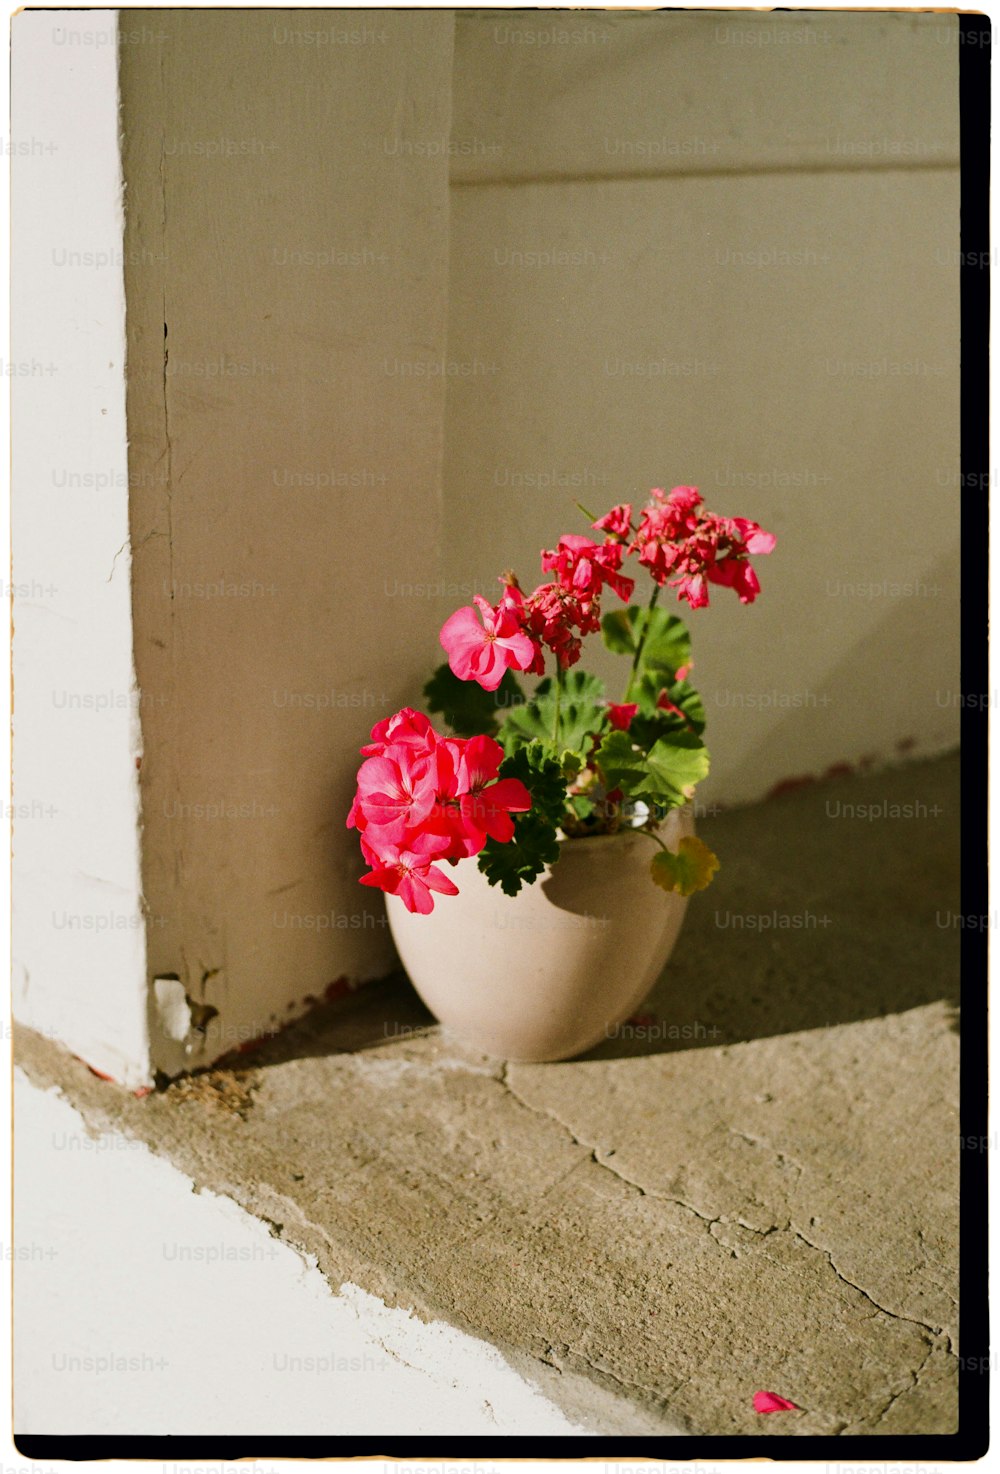 una pianta in vaso con fiori rosa seduta su una sporgenza